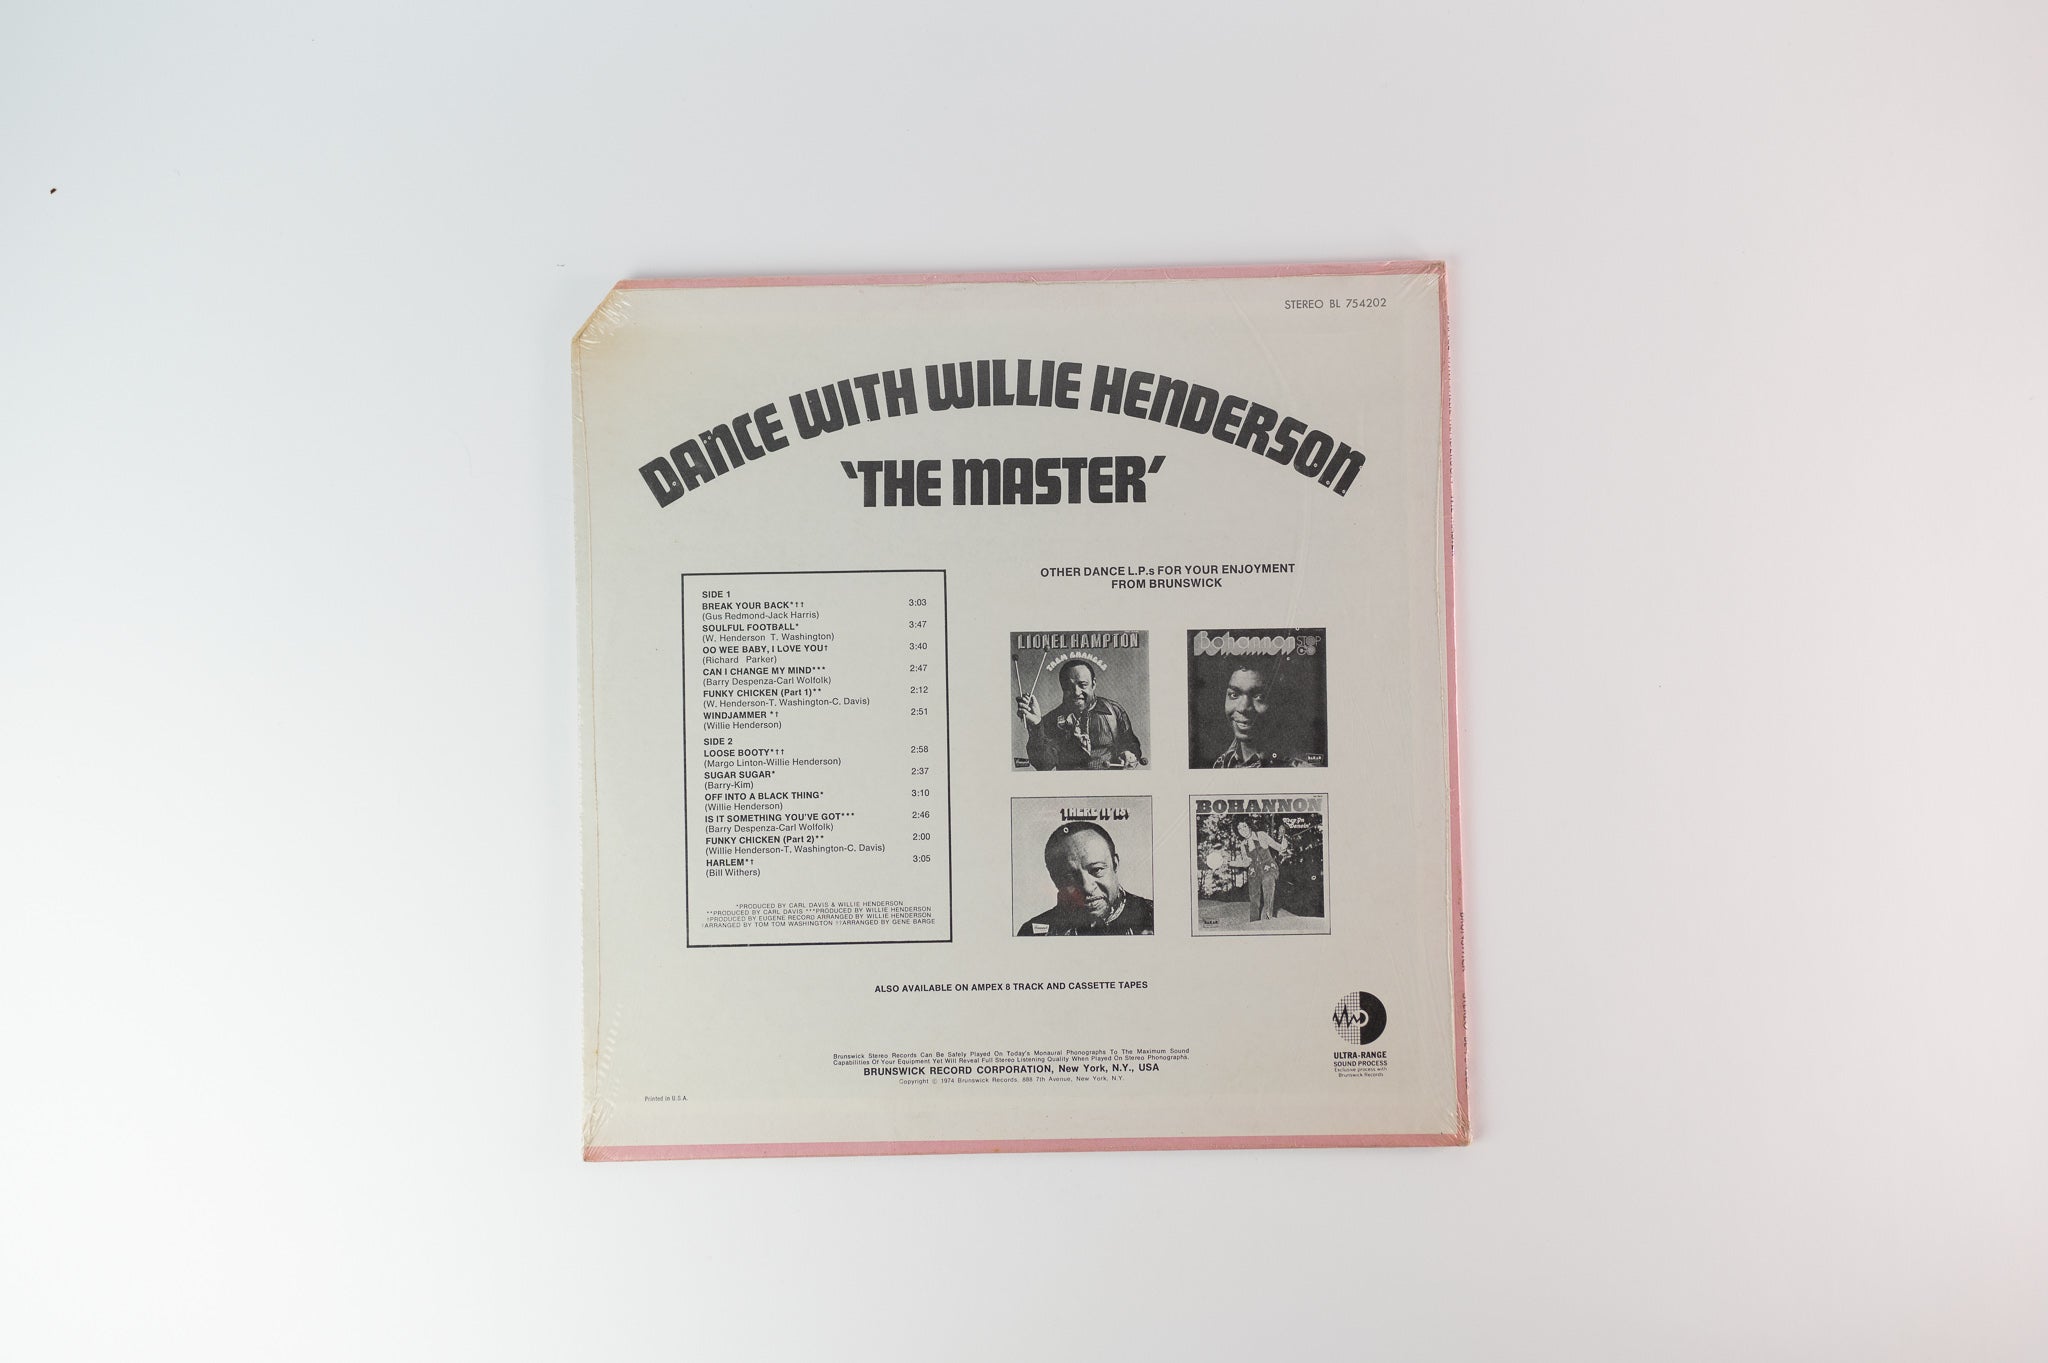 Willie Henderson - Dance With Willie Henderson "The Master" on Brunswick Sealed